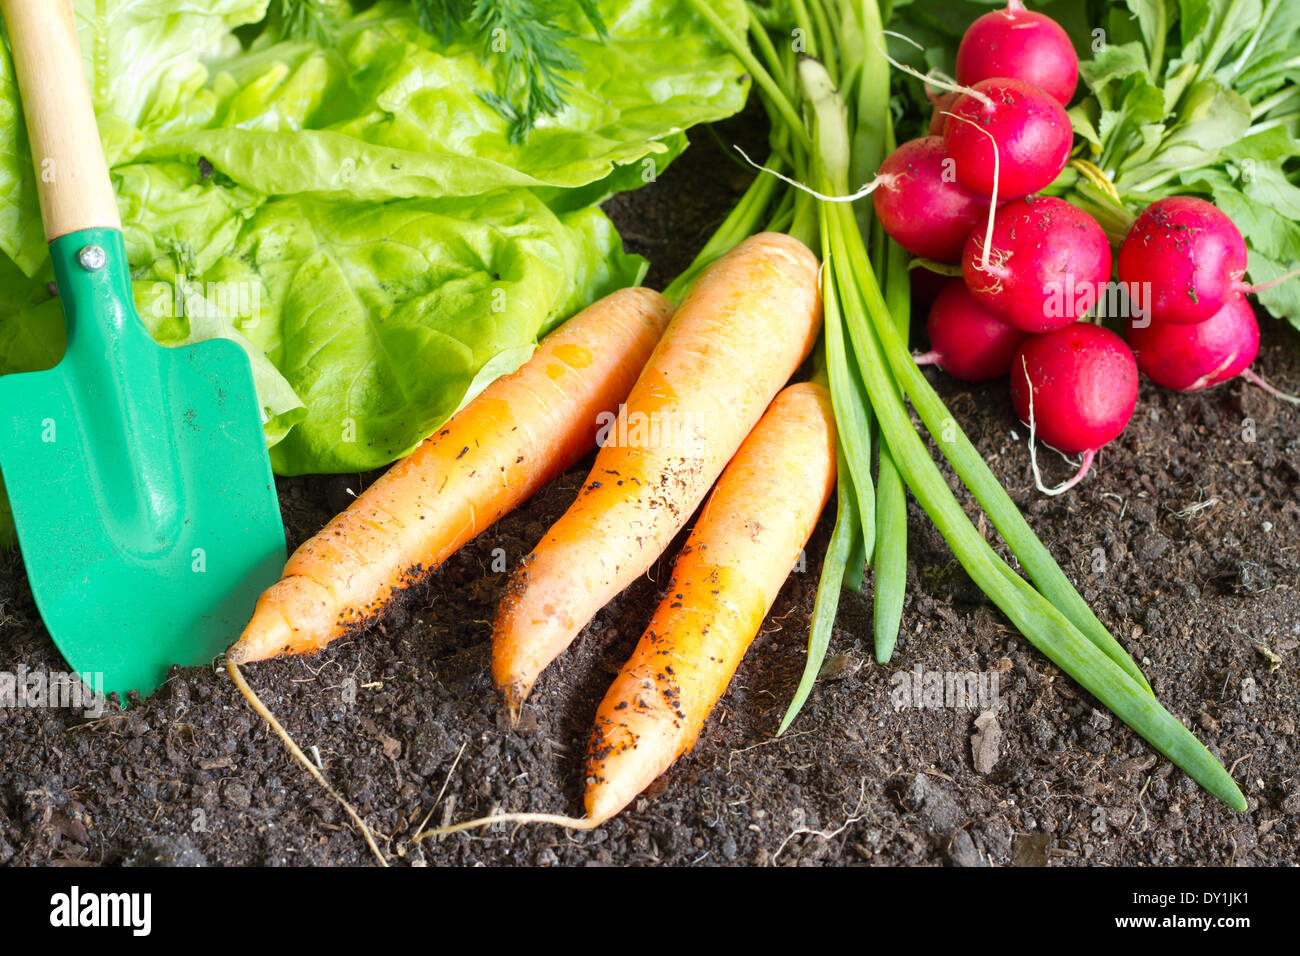 Fresh spring organic vegetables on the soil in the garden concept Stock Photo